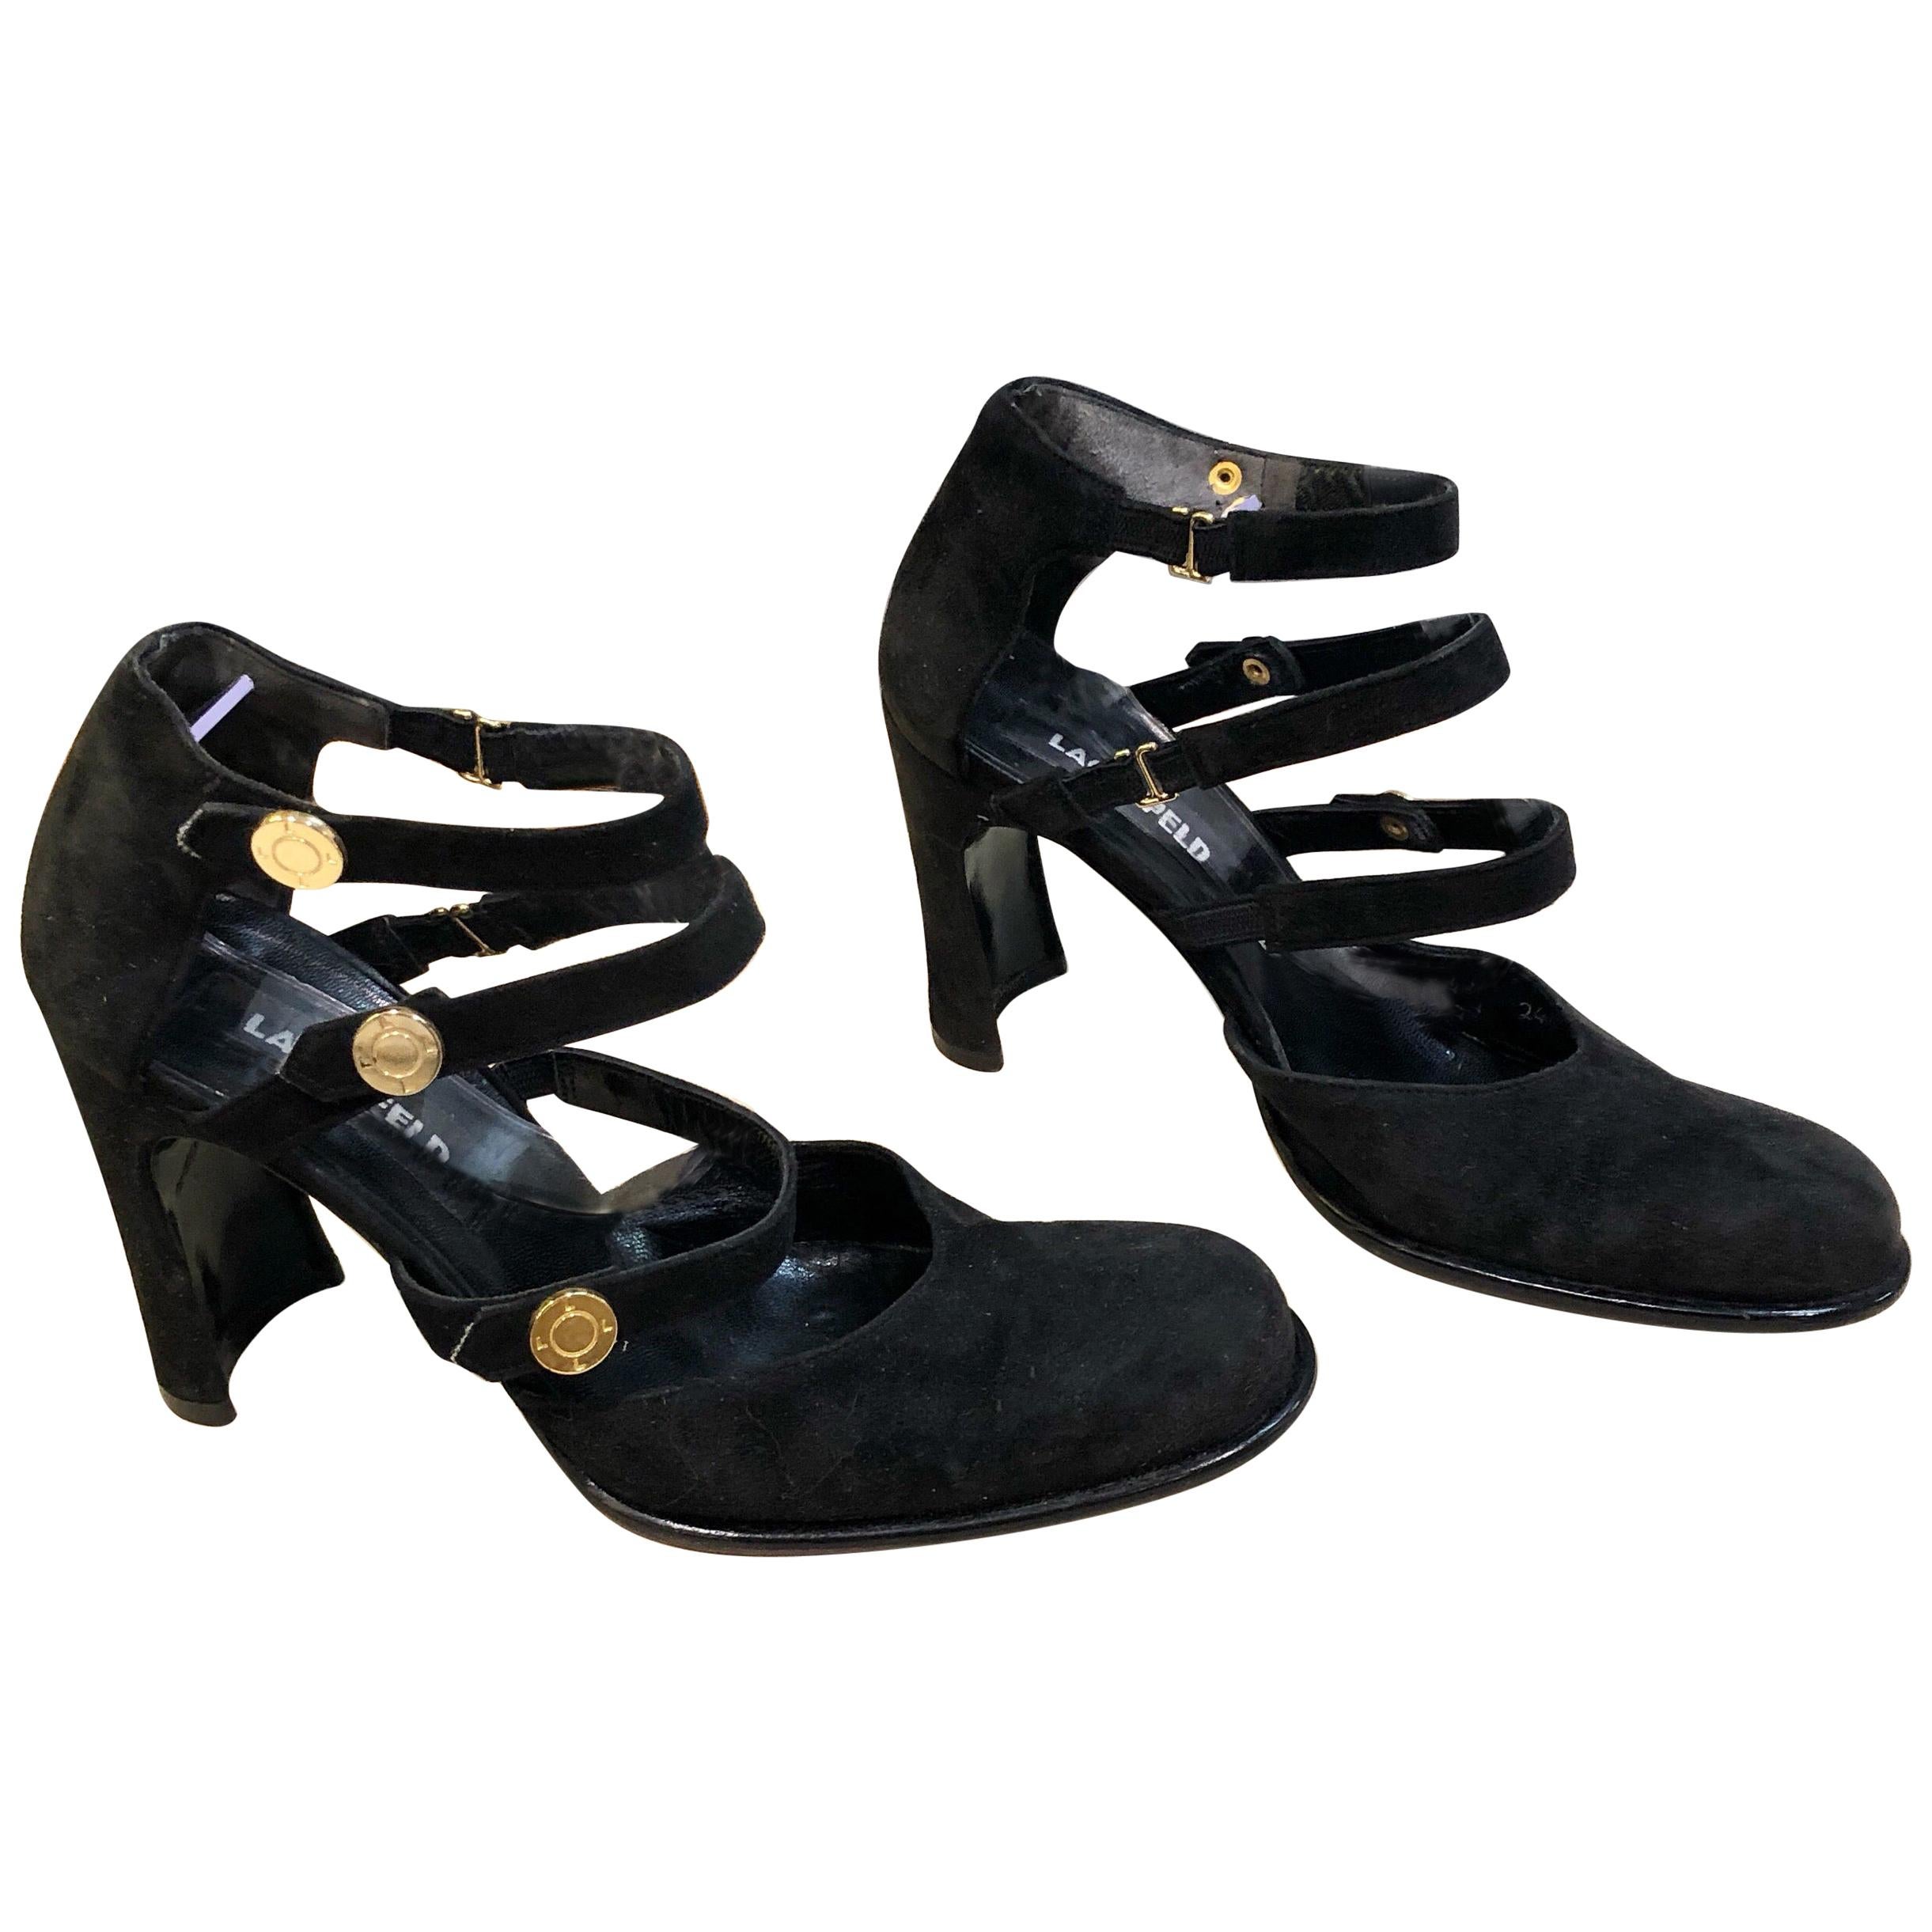 Karl Lagerfeld 1990s Size 6 Black Suede Leather Bondage Inspired Vintage Heels